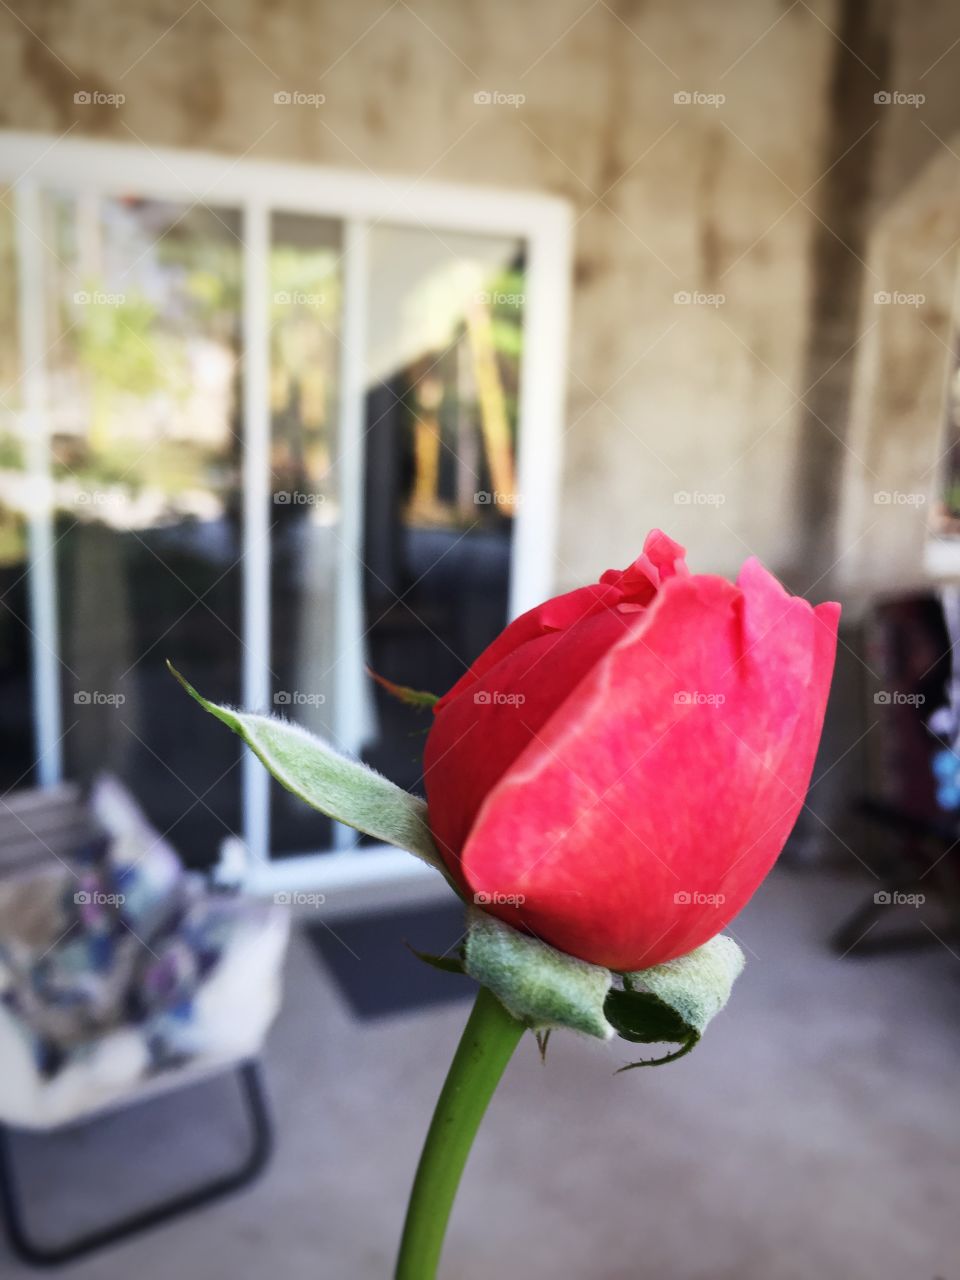 Rose in my garden 